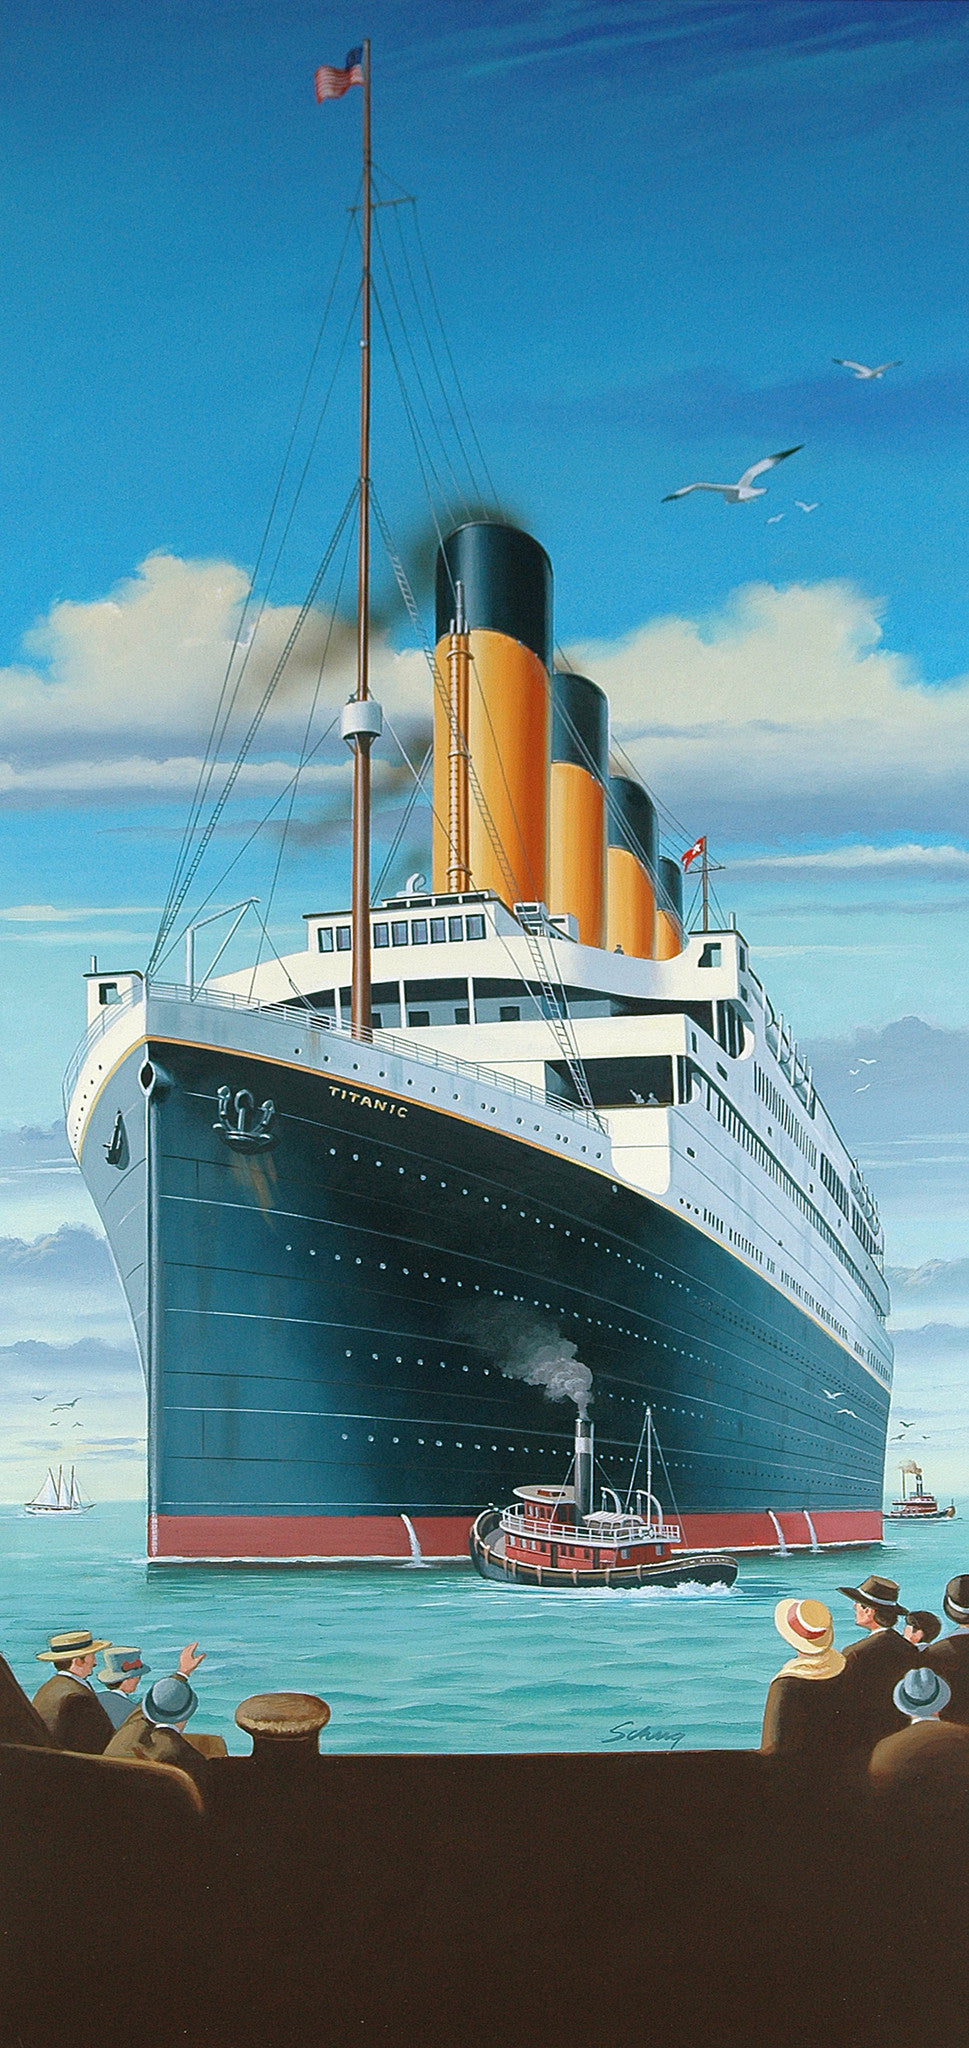 Original Titanic Retro Style Poster